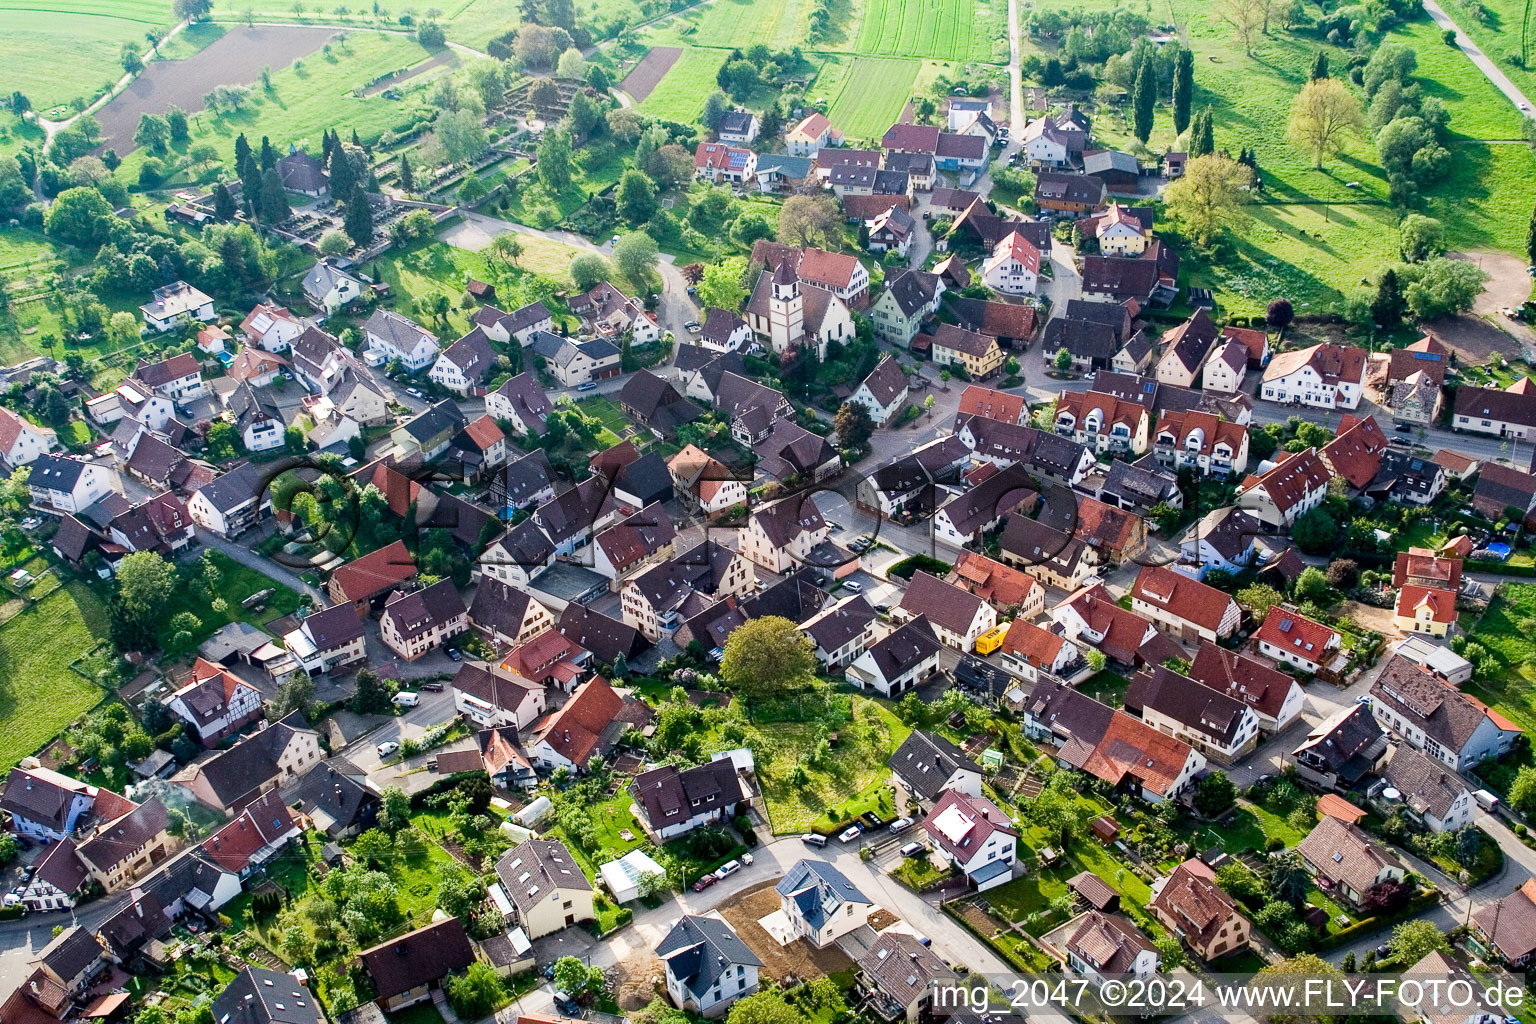 Village view in the district Graefenhausen in Birkenfeld in the state Baden-Wurttemberg